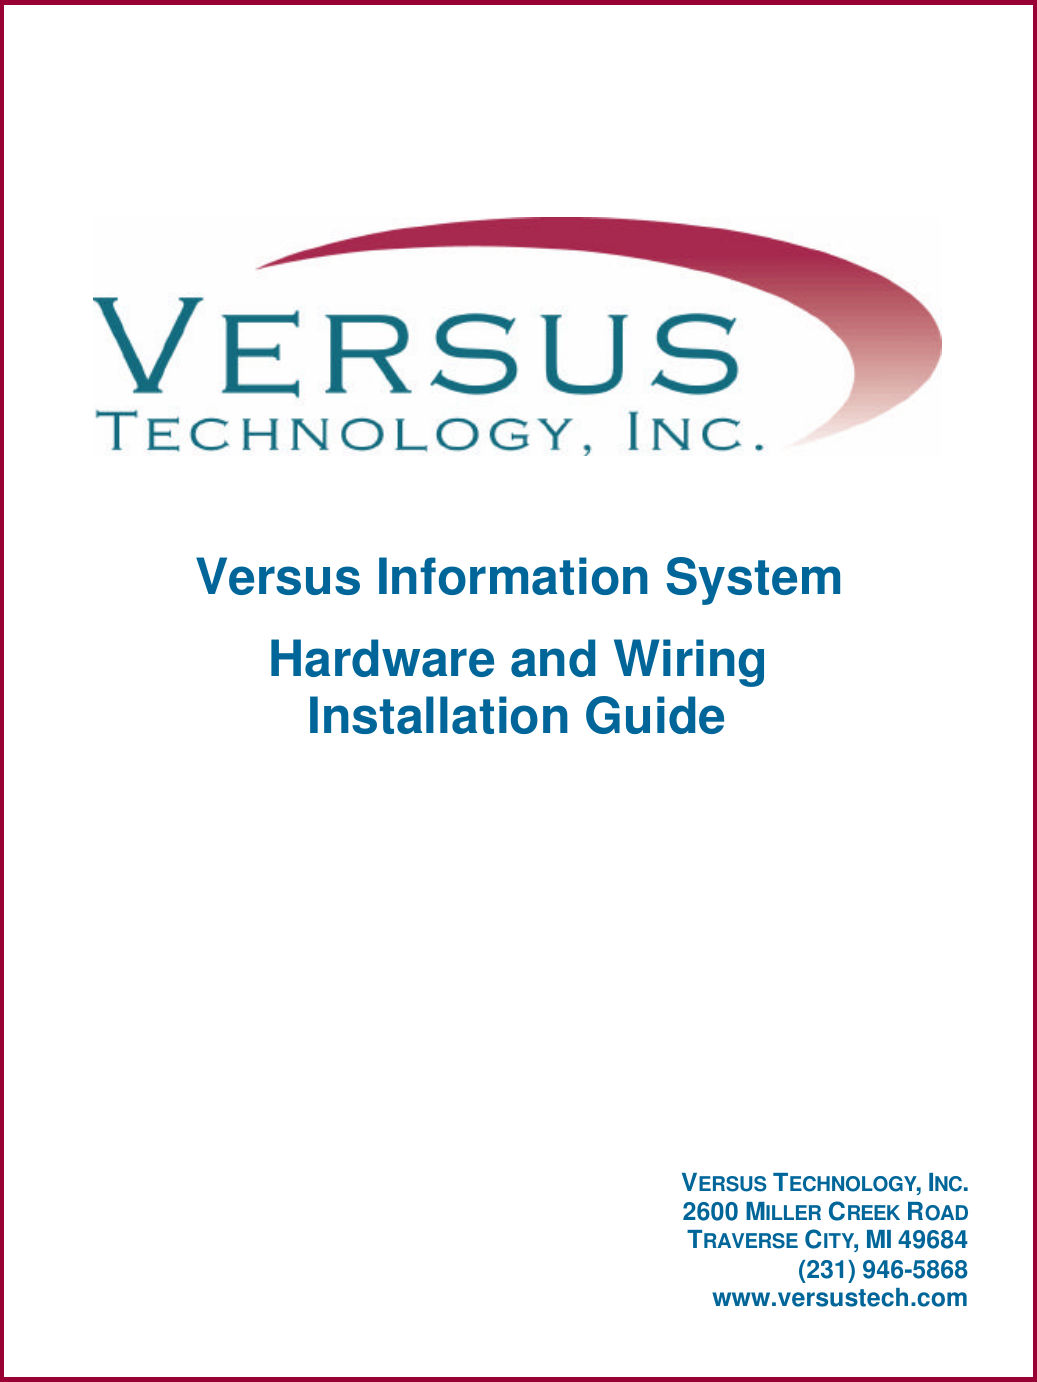       Versus Information System Hardware and Wiring Installation Guide            VERSUS TECHNOLOGY, INC. 2600 MILLER CREEK ROAD TRAVERSE CITY, MI 49684 (231) 946-5868 www.versustech.com